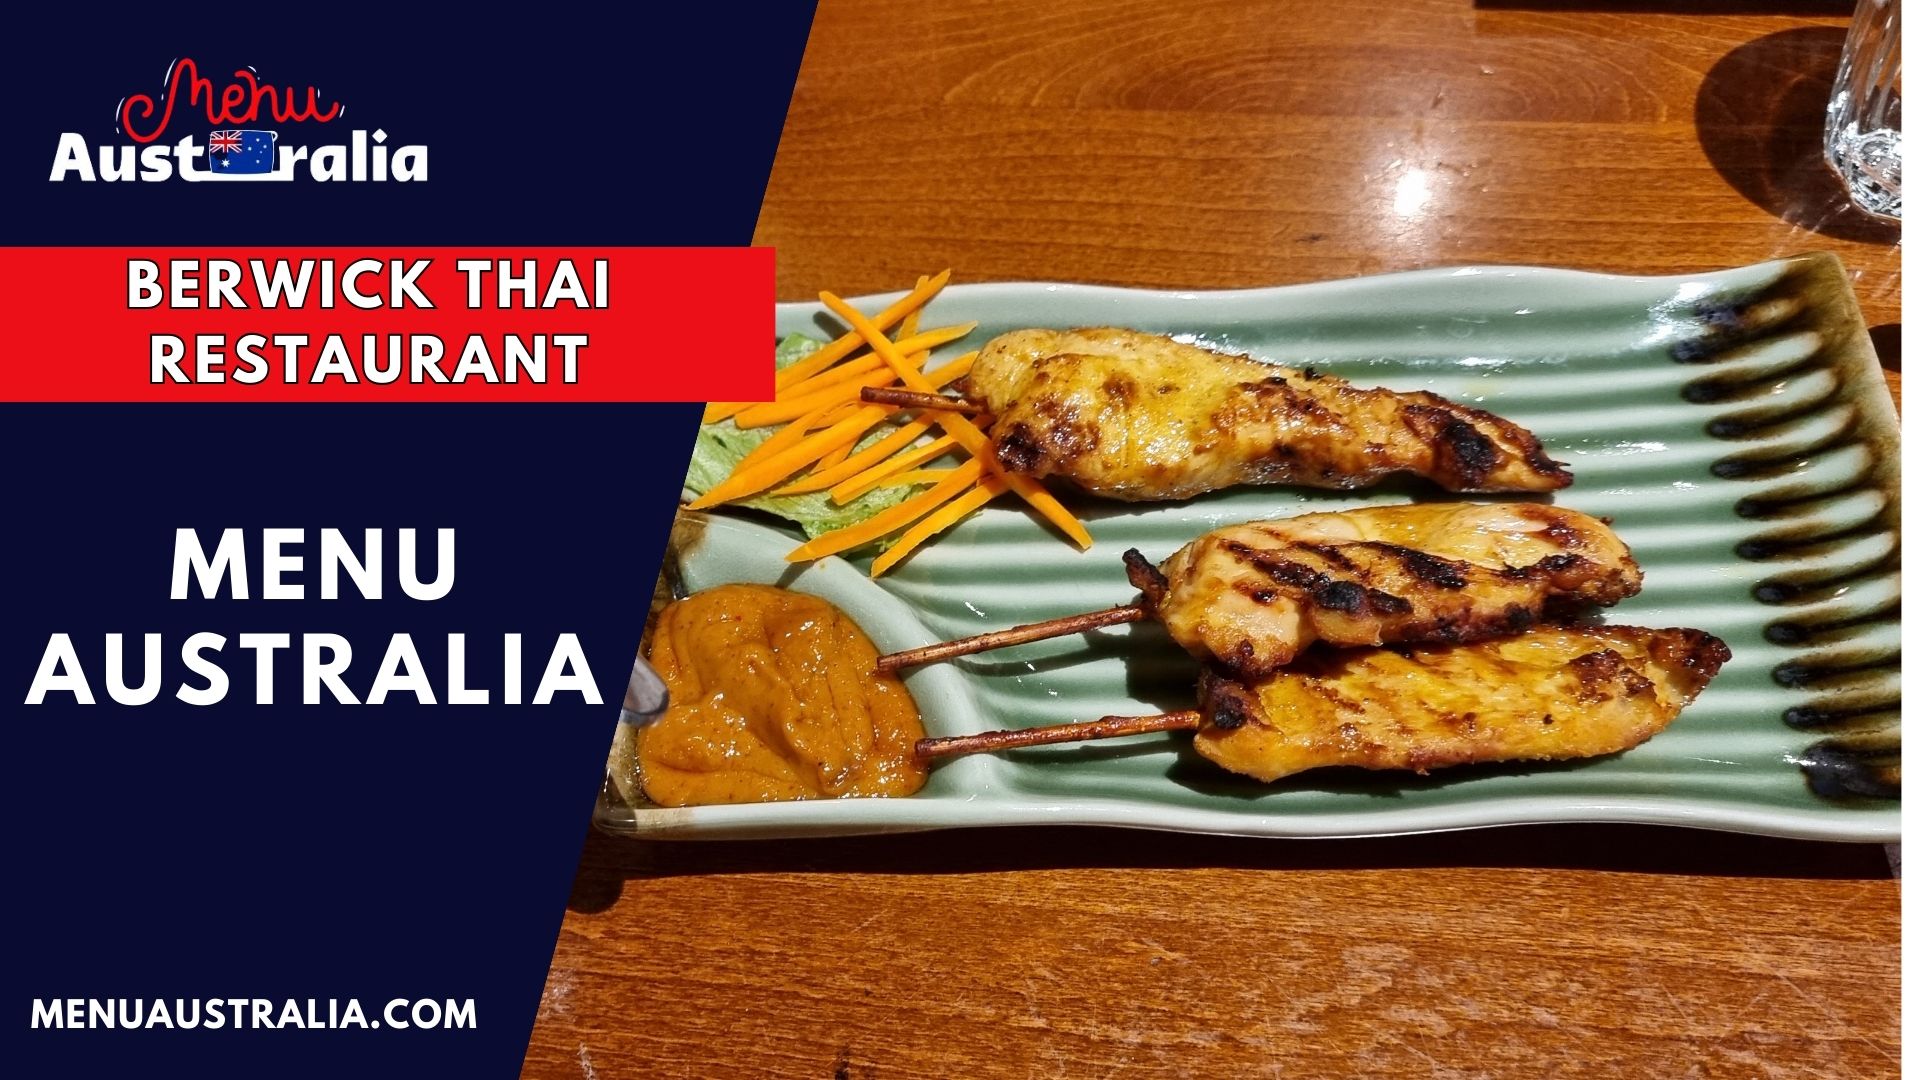 Berwick Thai Restaurant Menu Australia